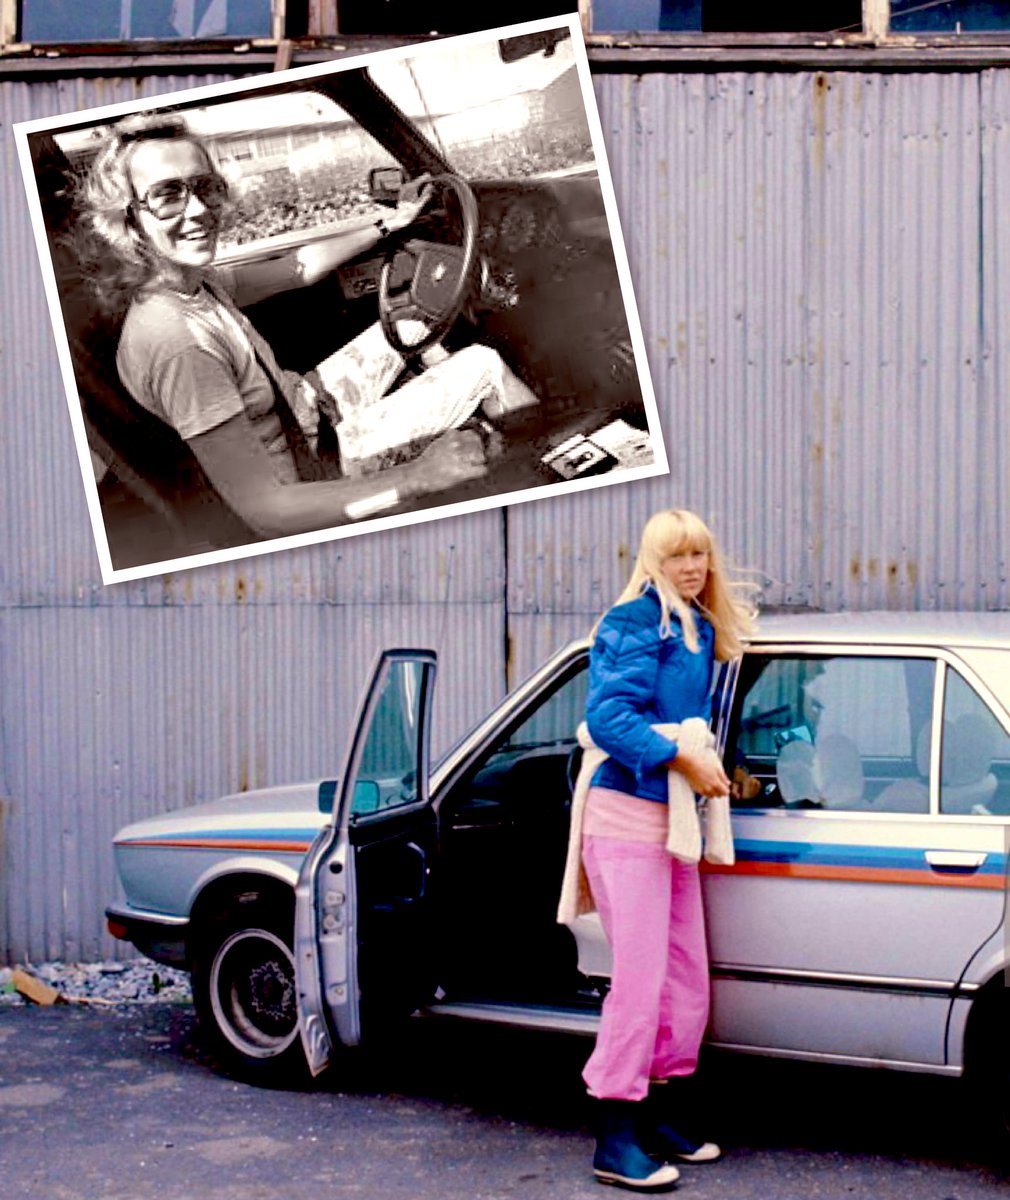 A big Happy Birthday Agnetha Fältskog, singer, songwriter and musician with ABBA, born #OnThisDay in 1950. 

📷 Manuel Litran /NK 

#ABBA #ABBAvoyage #AgnethaFältskog #BMW